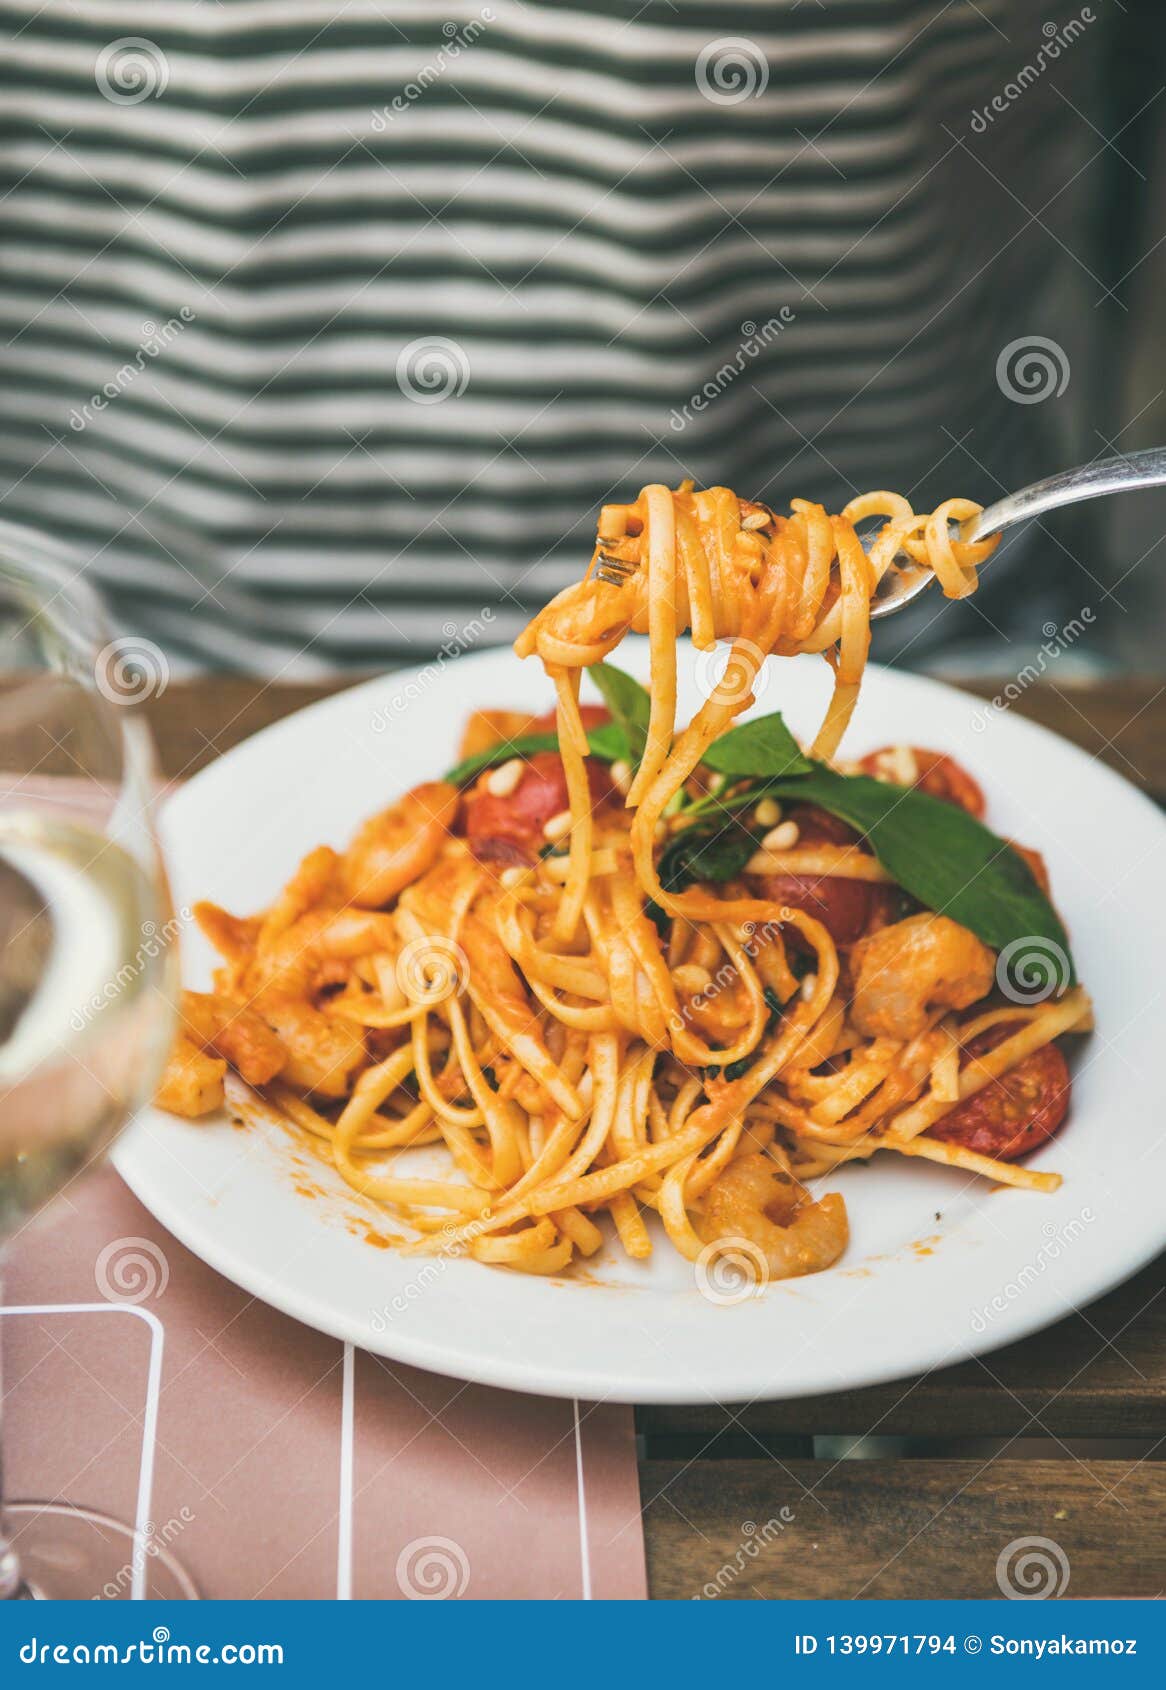 man eating italian spaghetti pasta with fork